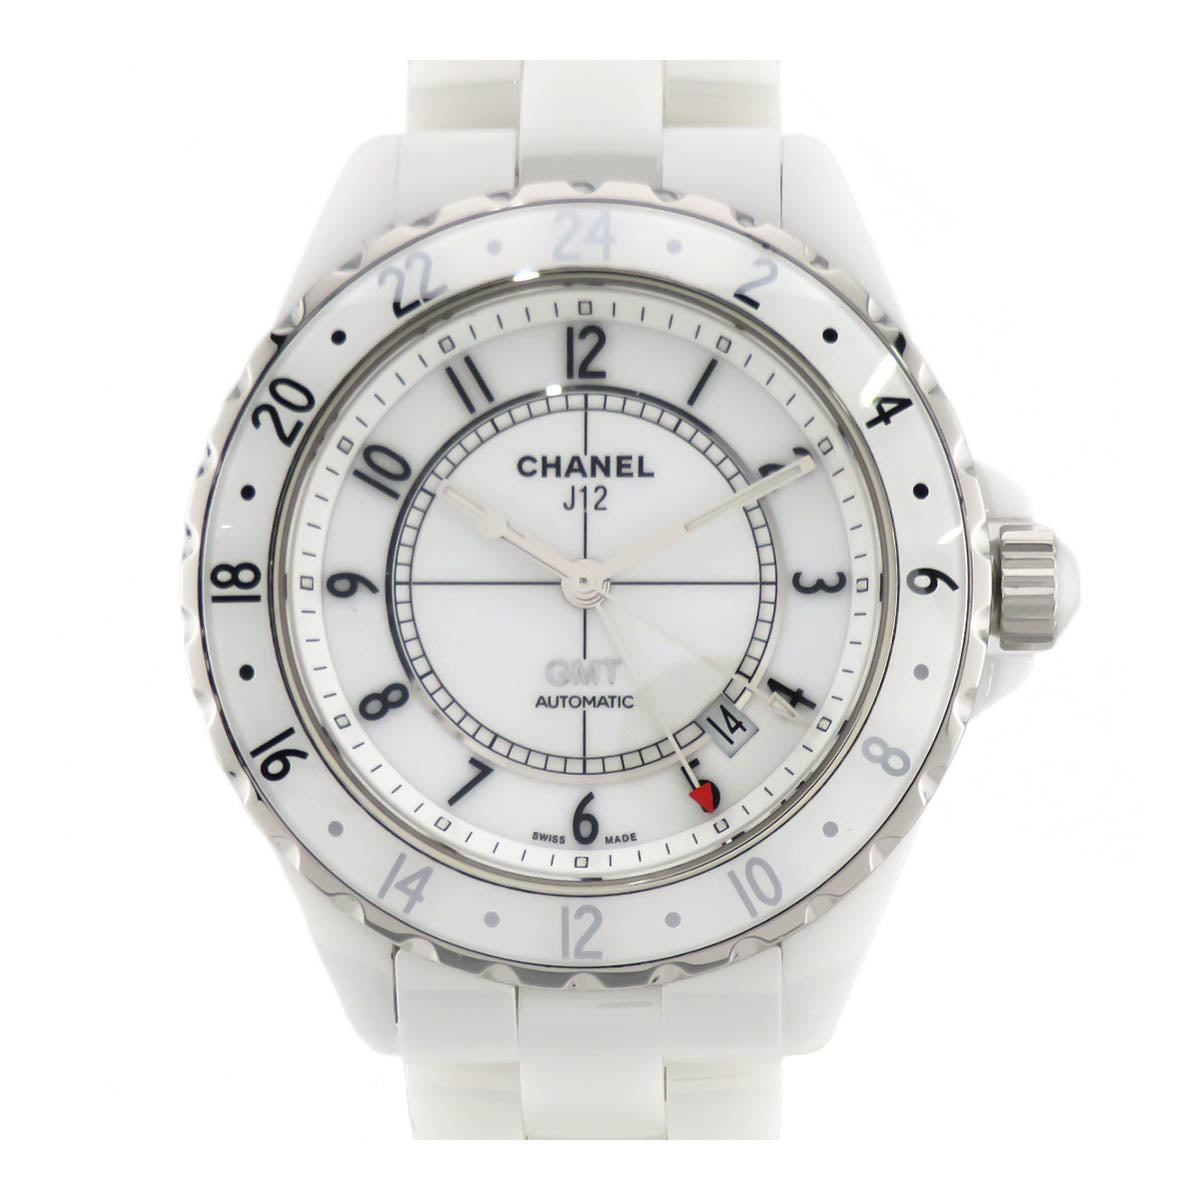 Automatic J12 GMT Wrist Watch H2126